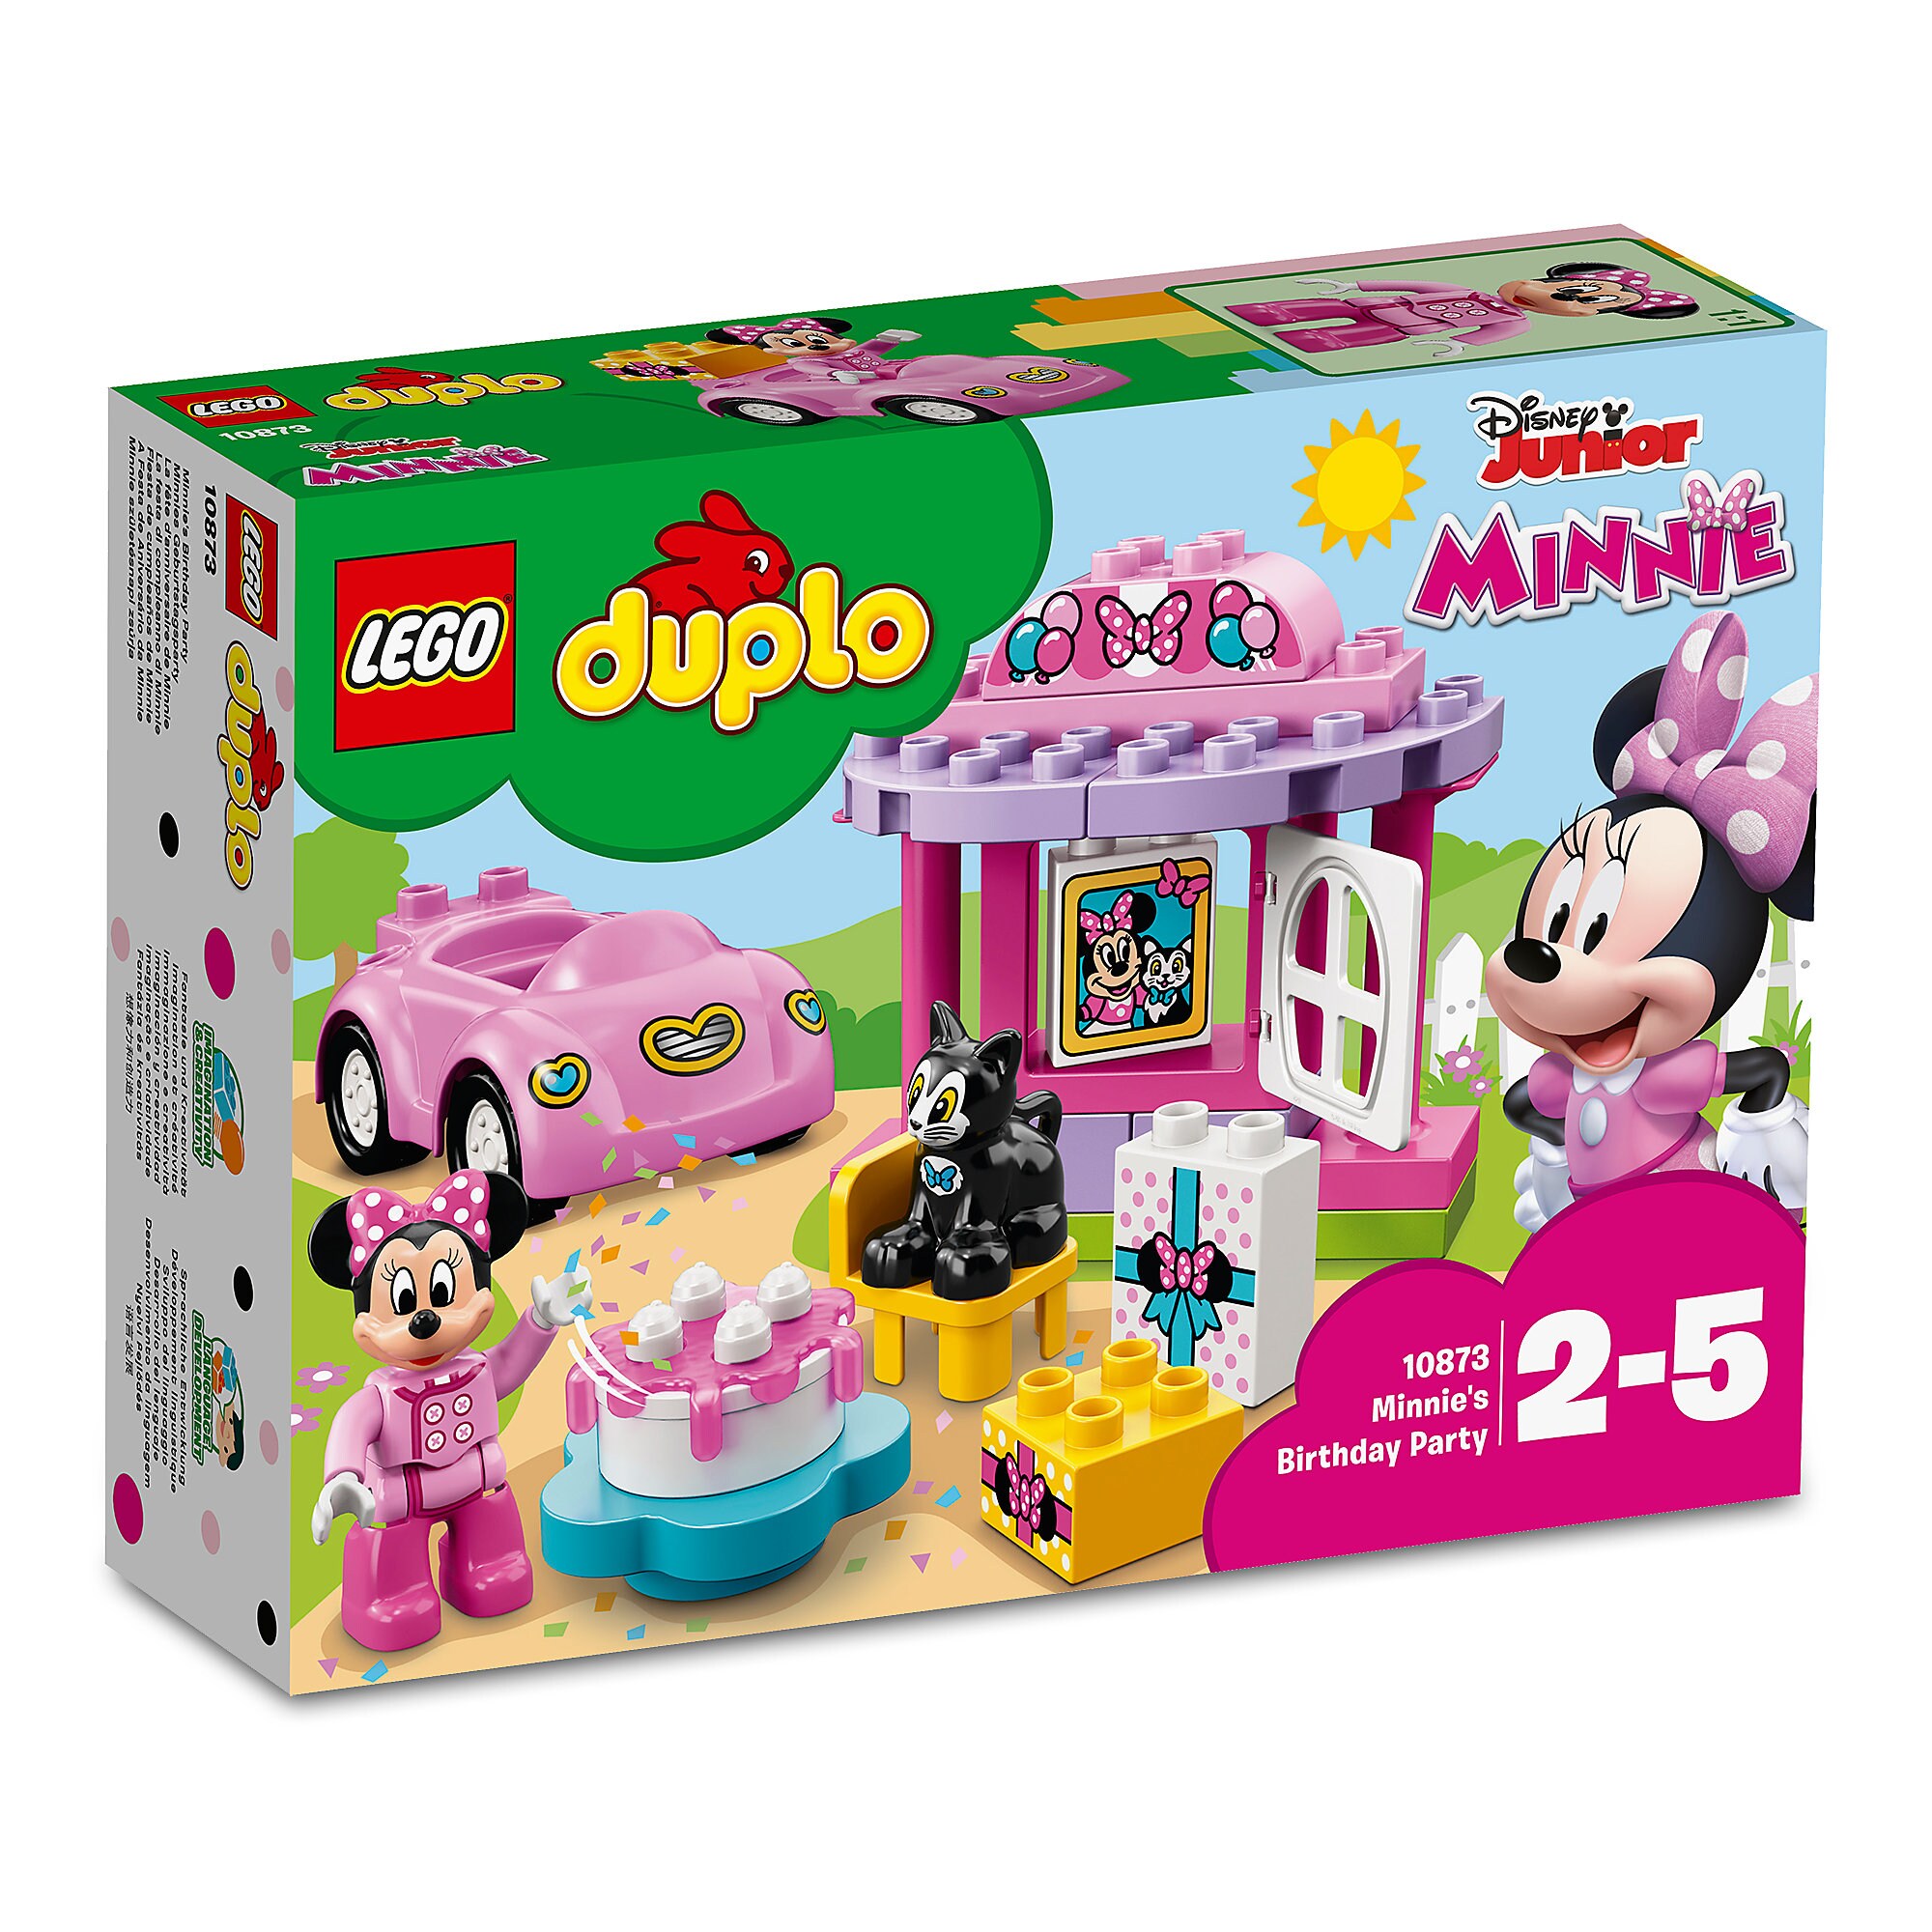 Minnie's Birthday Party Duplo Playset by LEGO